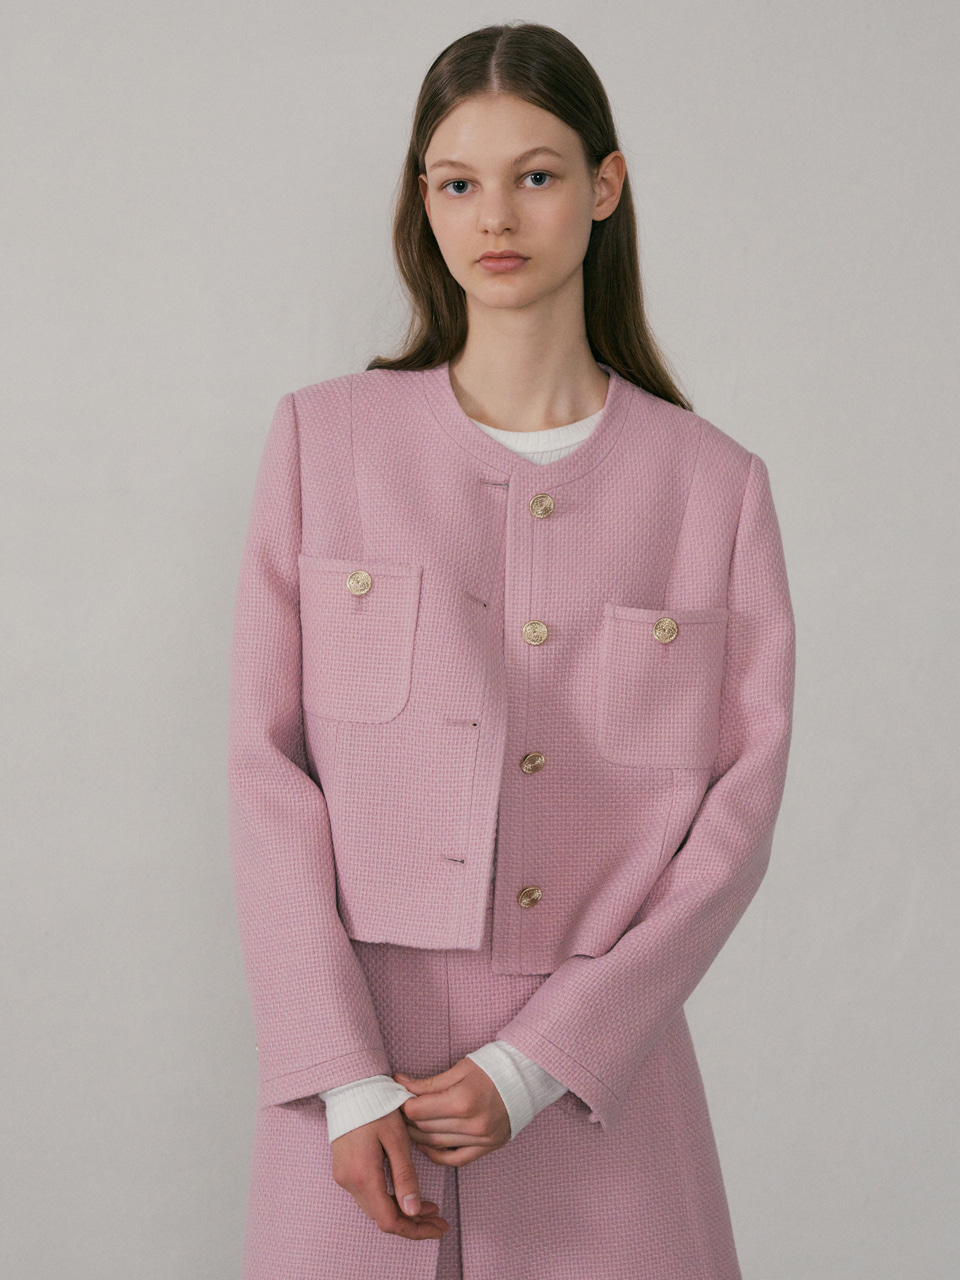 Flat Tweed Jacket (Pink)